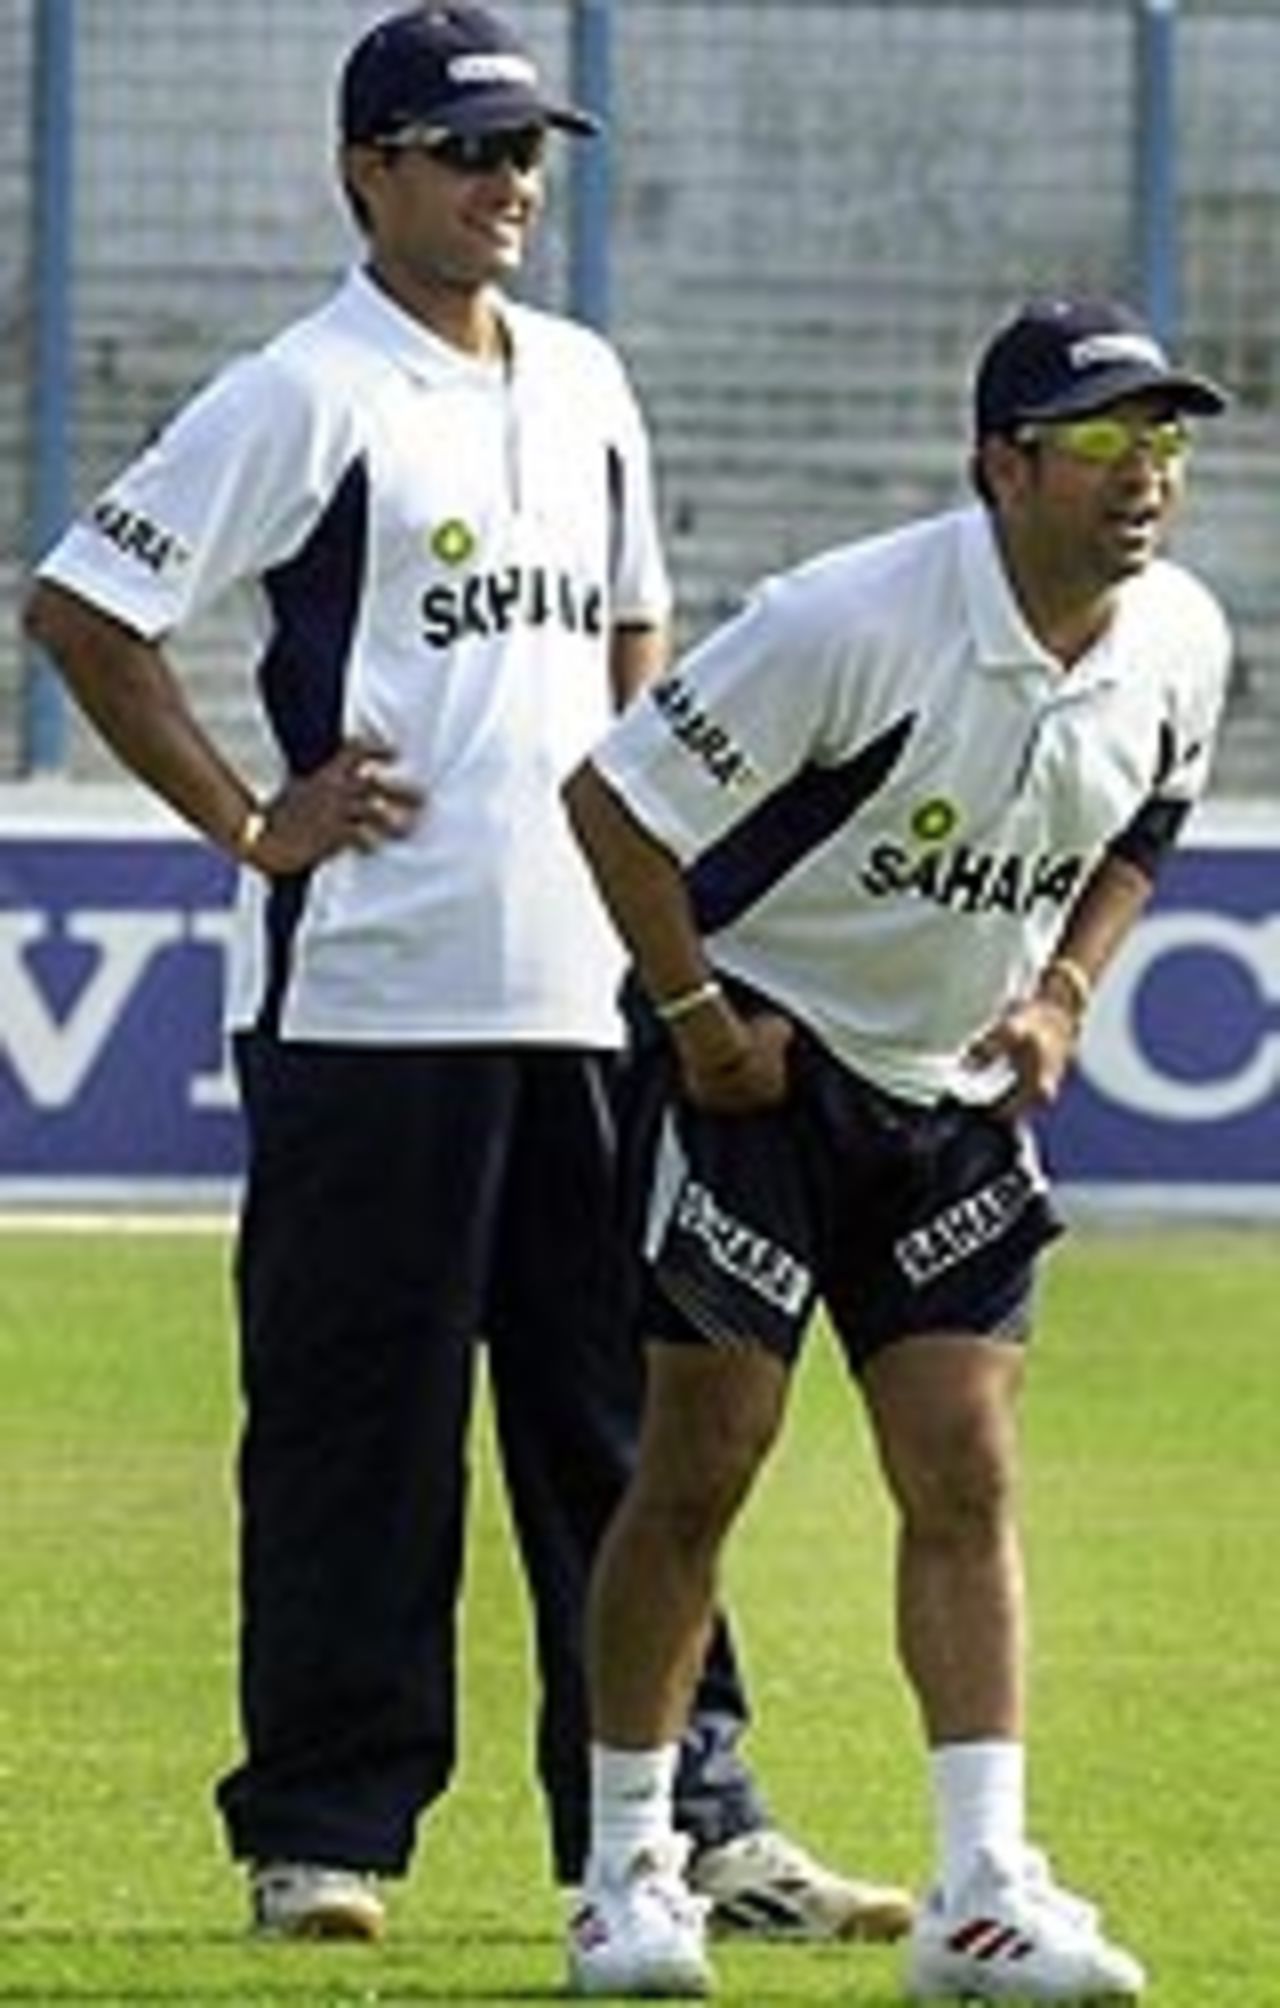 Sachin Tendulkar and Sourav Ganguly at a practice session, Chittagong, December 22, 2004